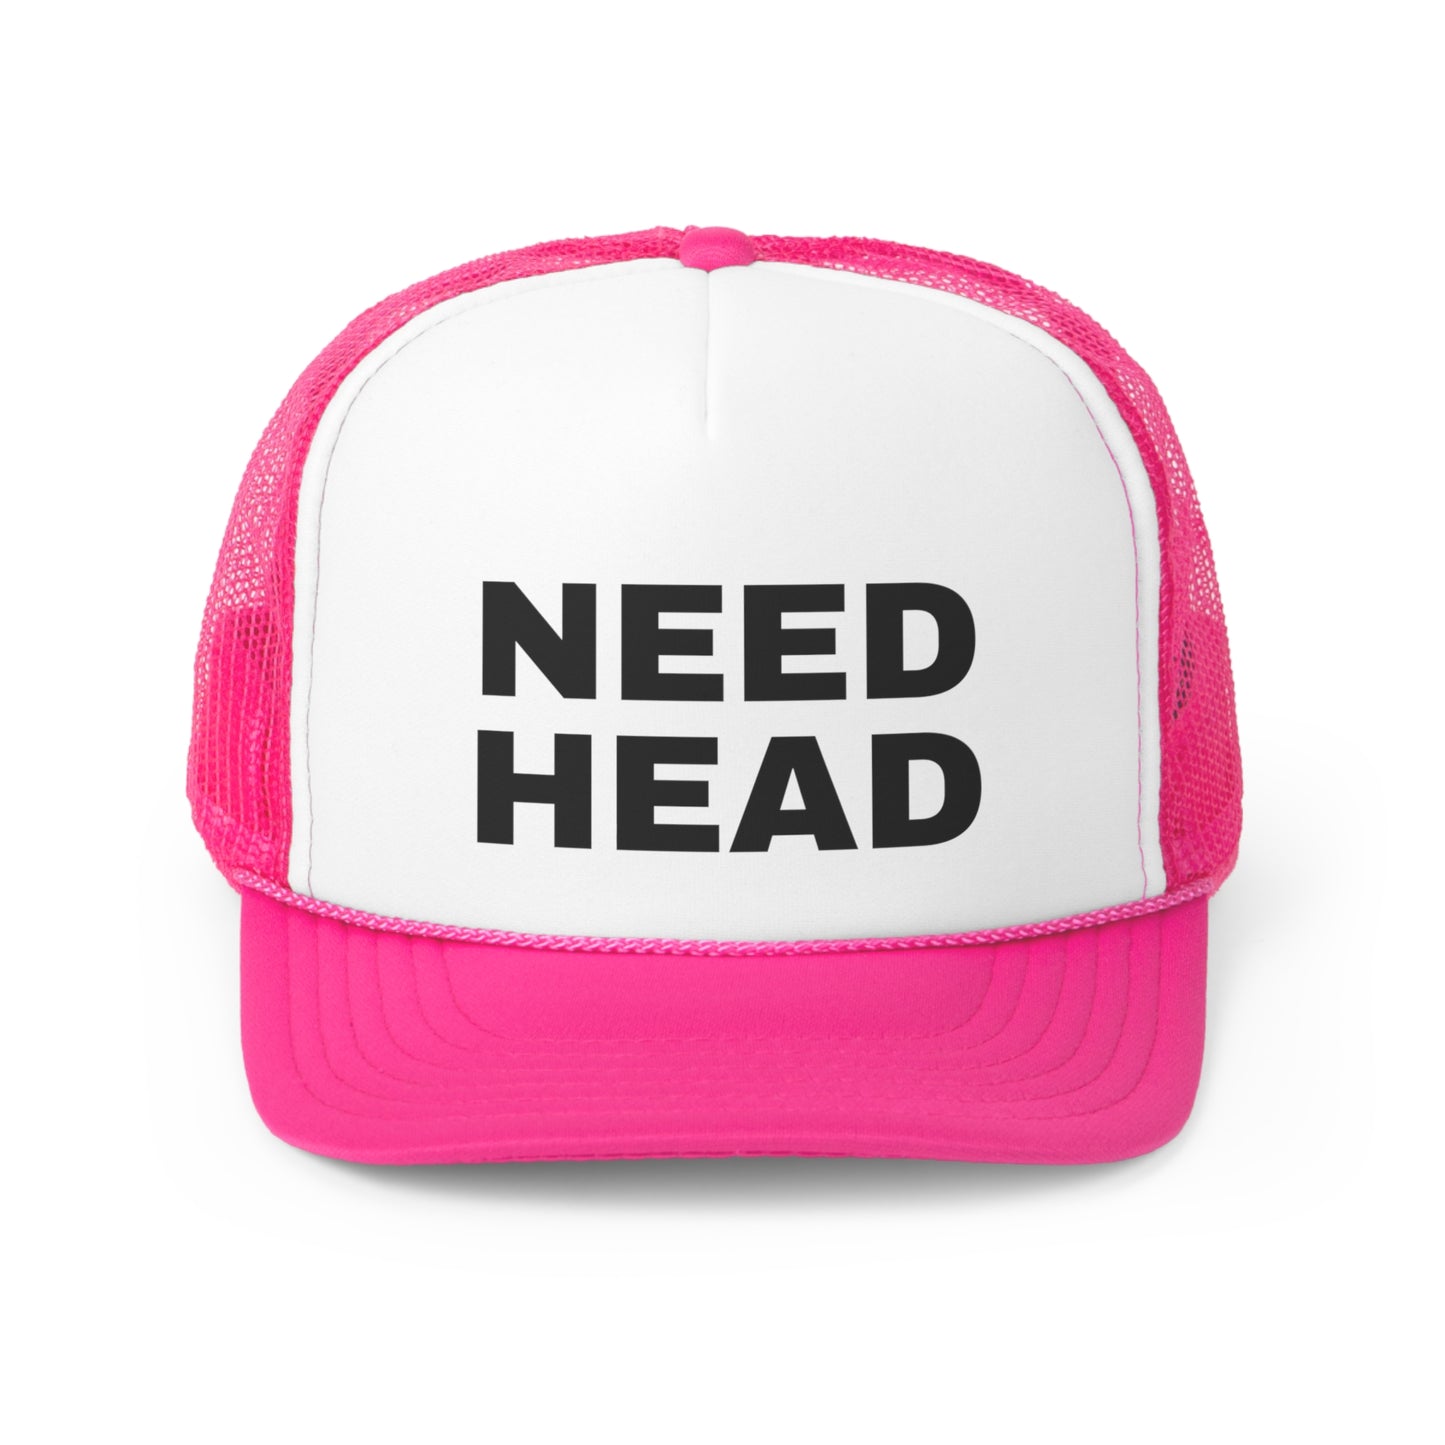 Need head Trucker Cap